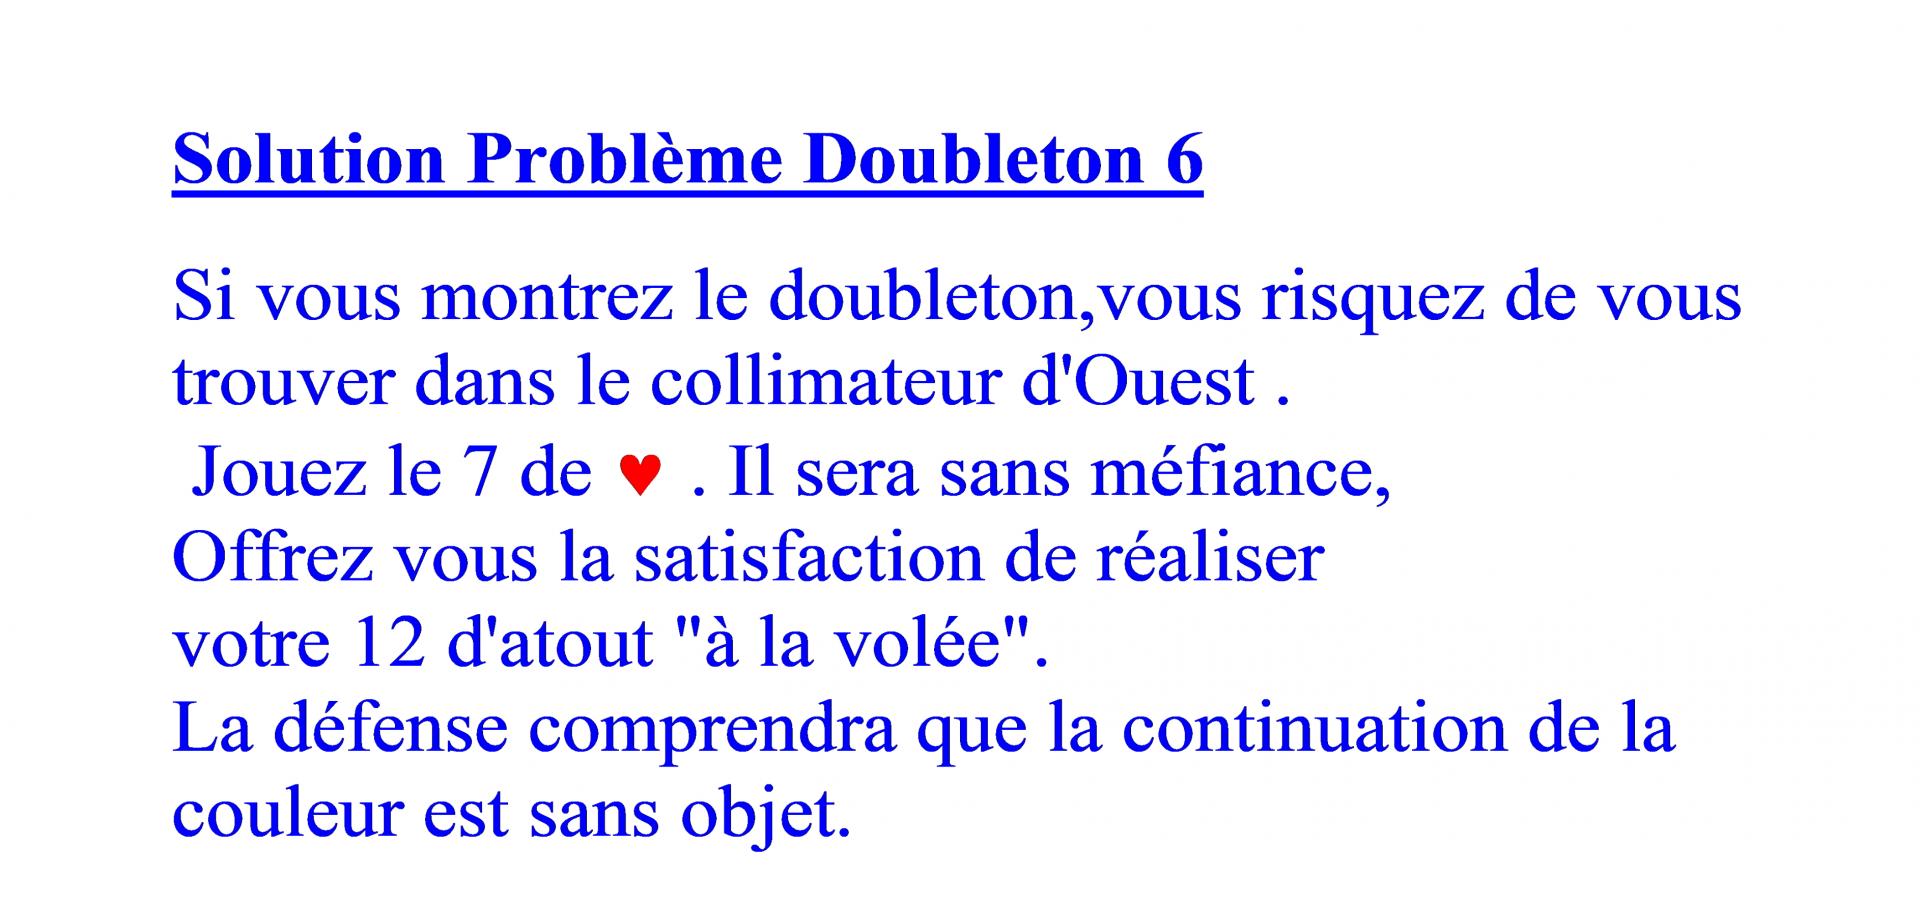 Doubleton 6 r